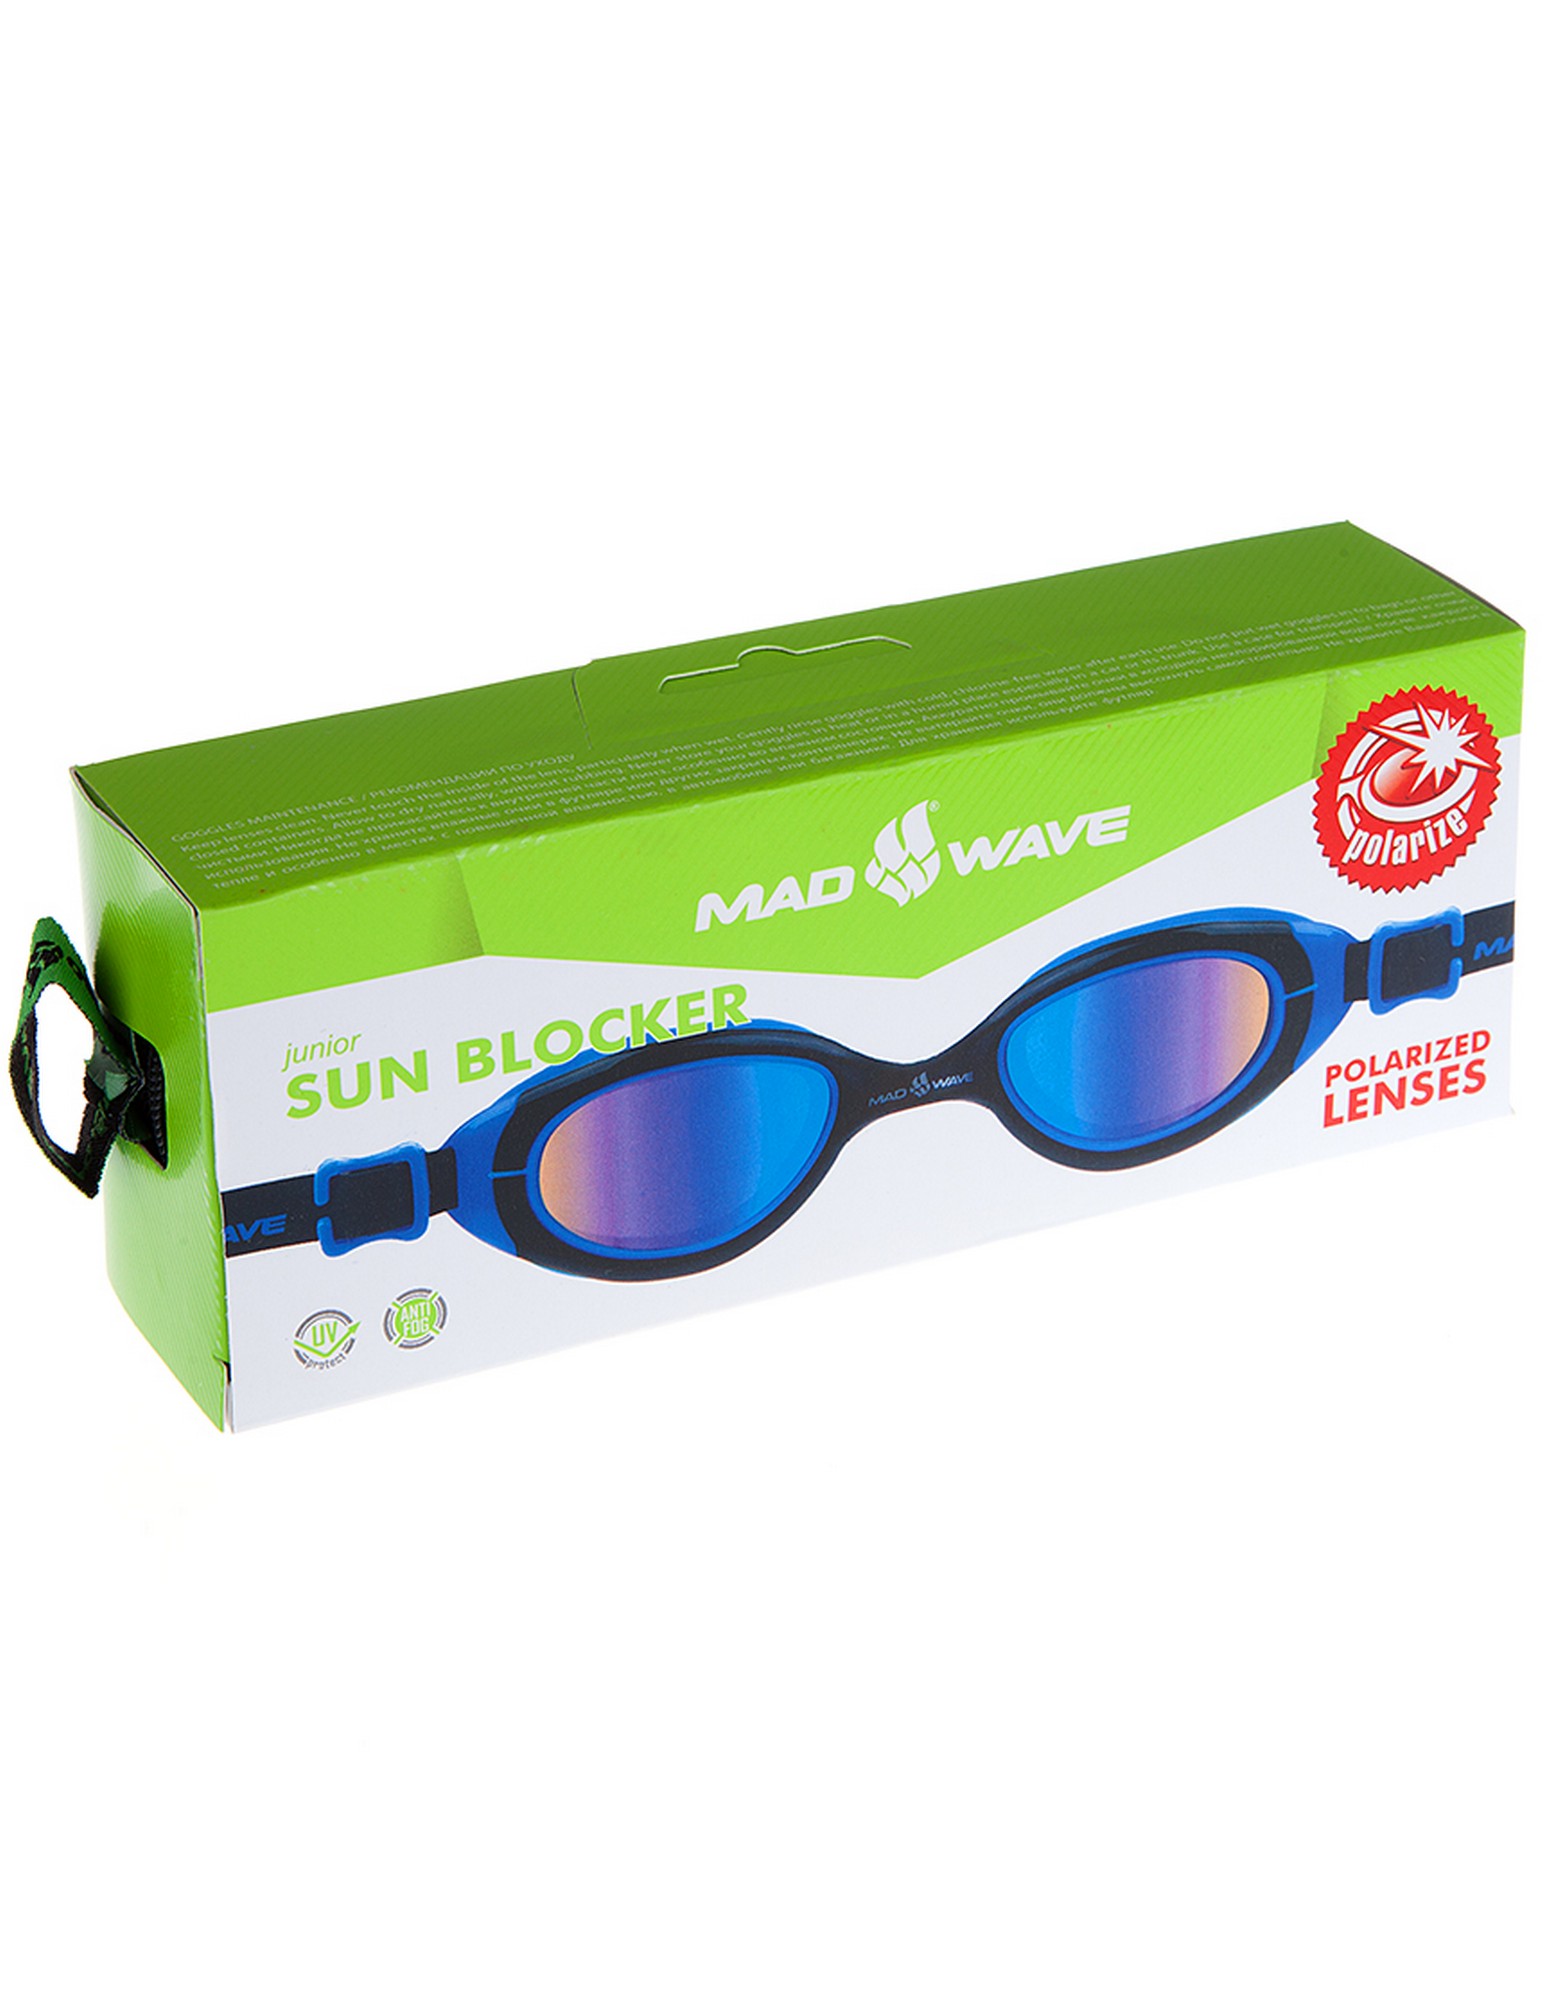 Очки для плавания юниорские Mad Wave Sun Blocker Junior M0413 02 0 03W 1561_2000